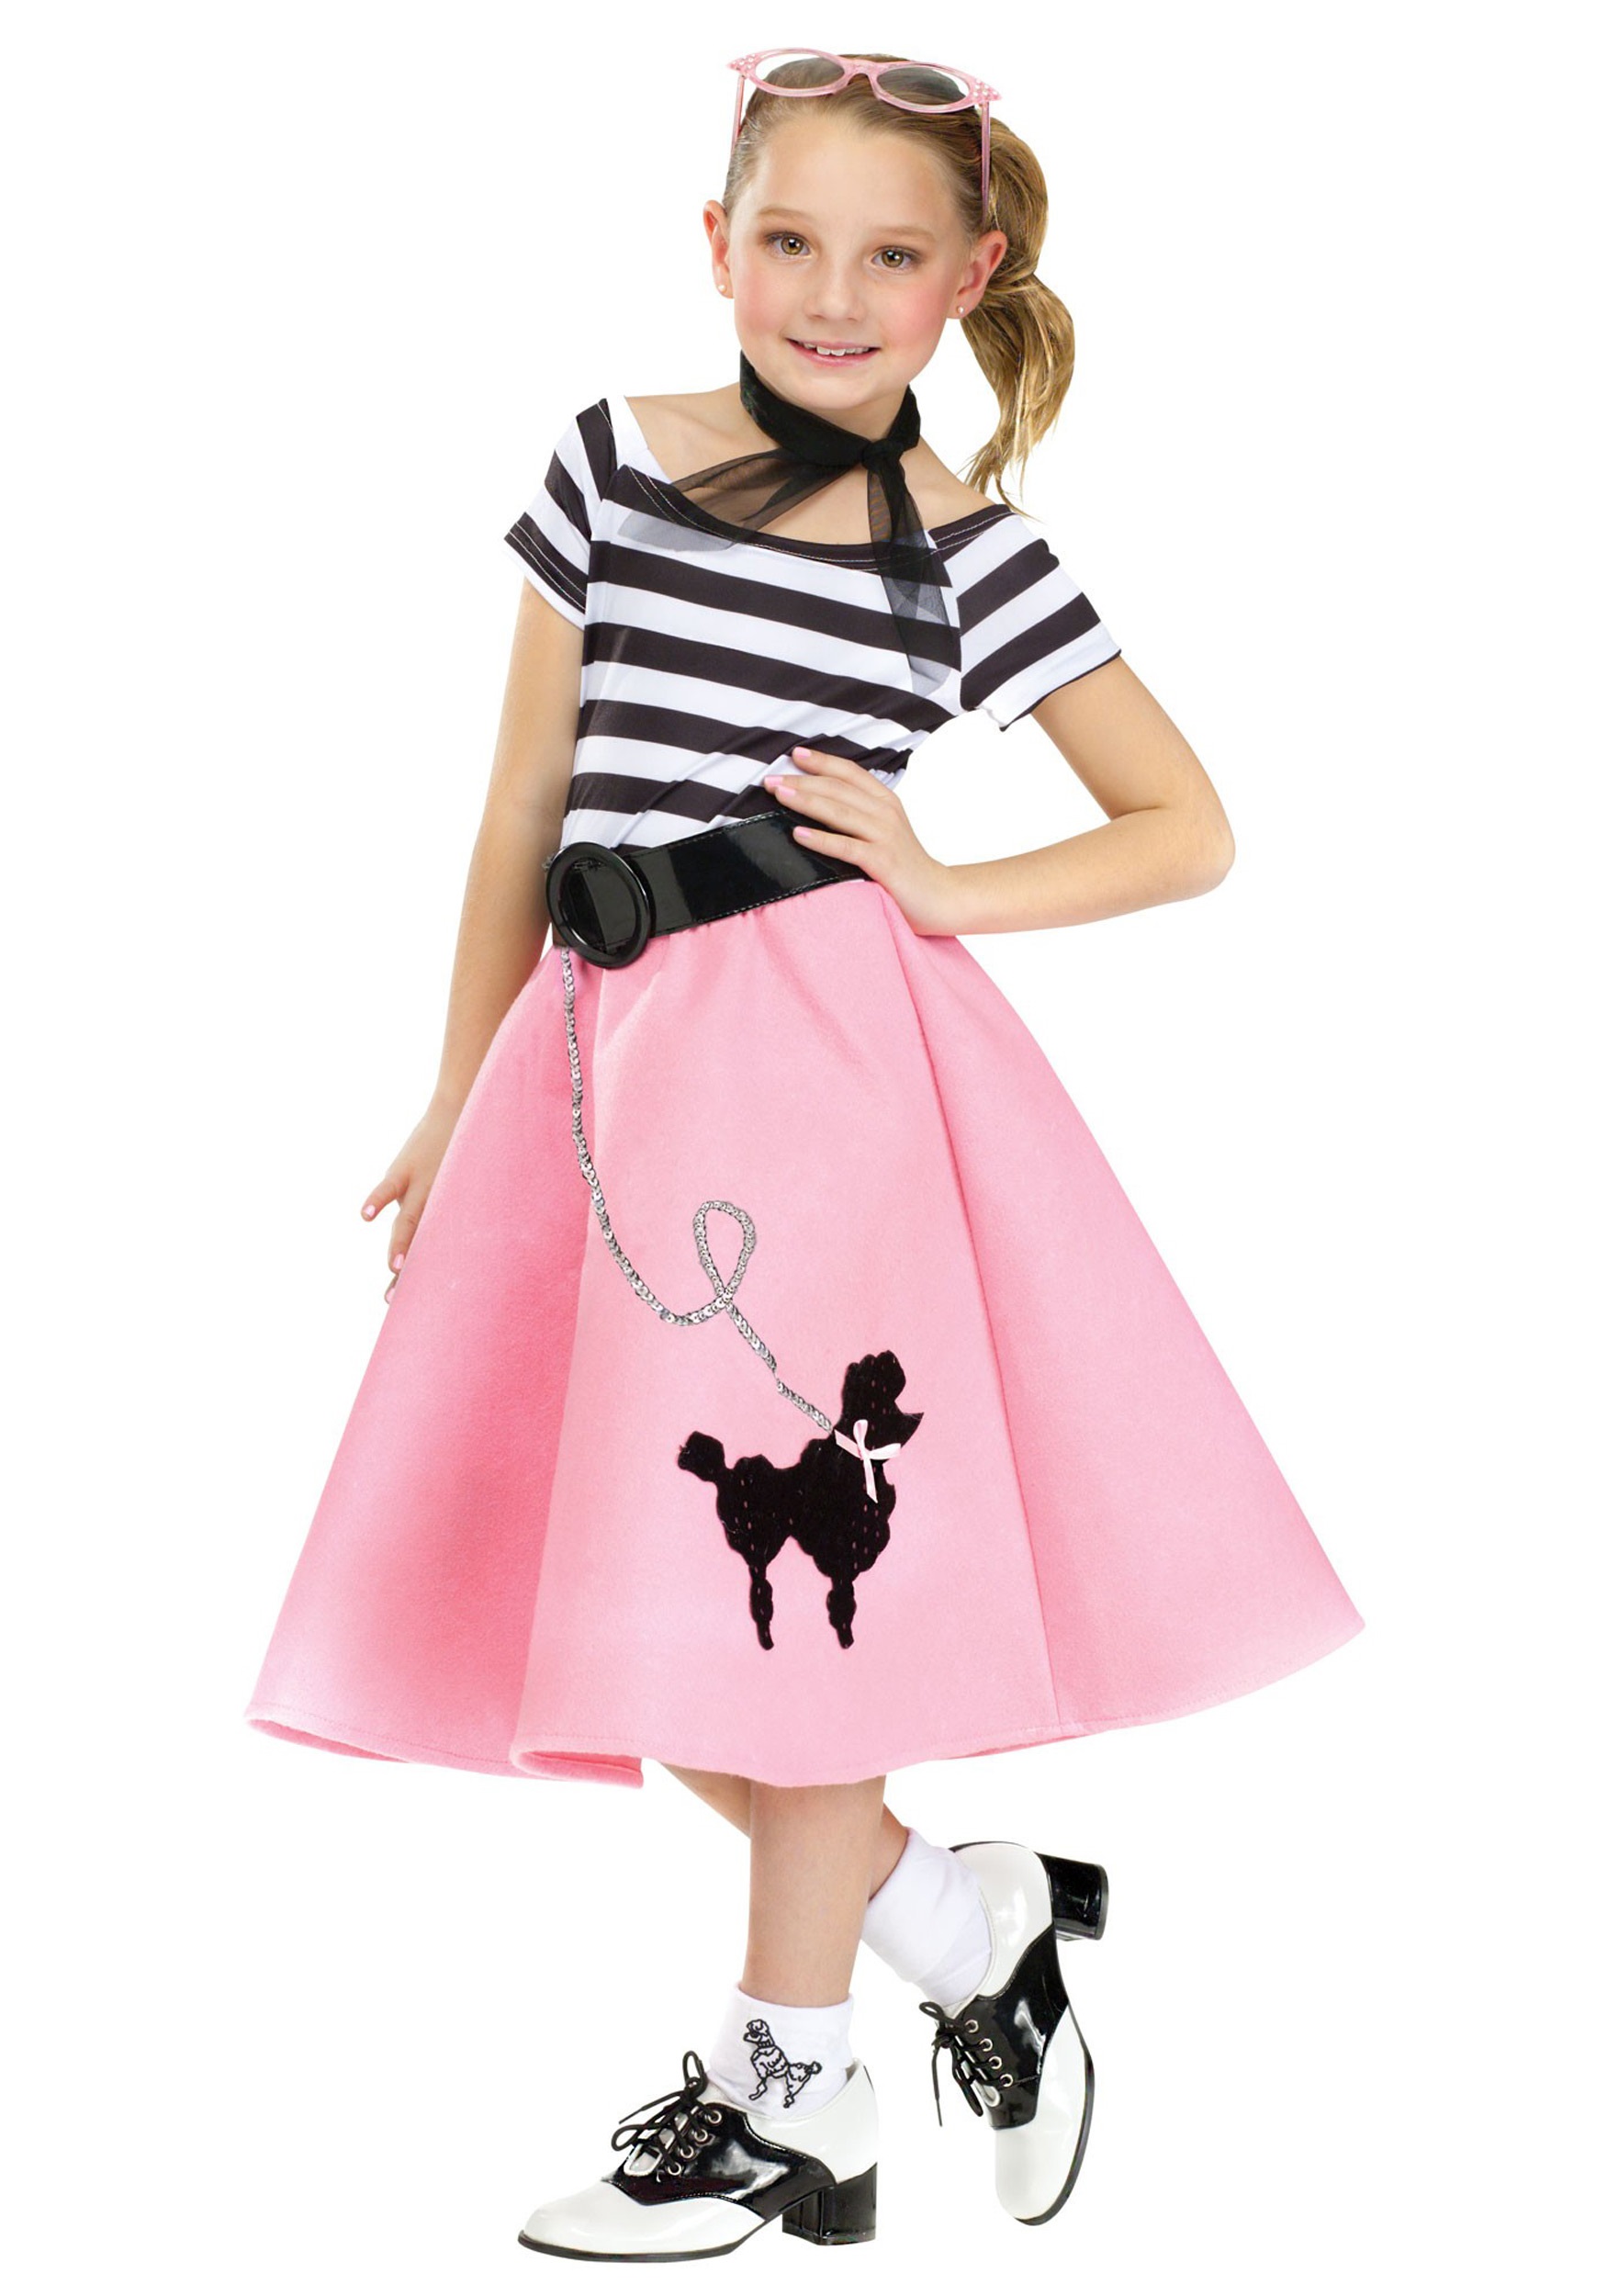 Poodle Skirt Dress Costume for Girls